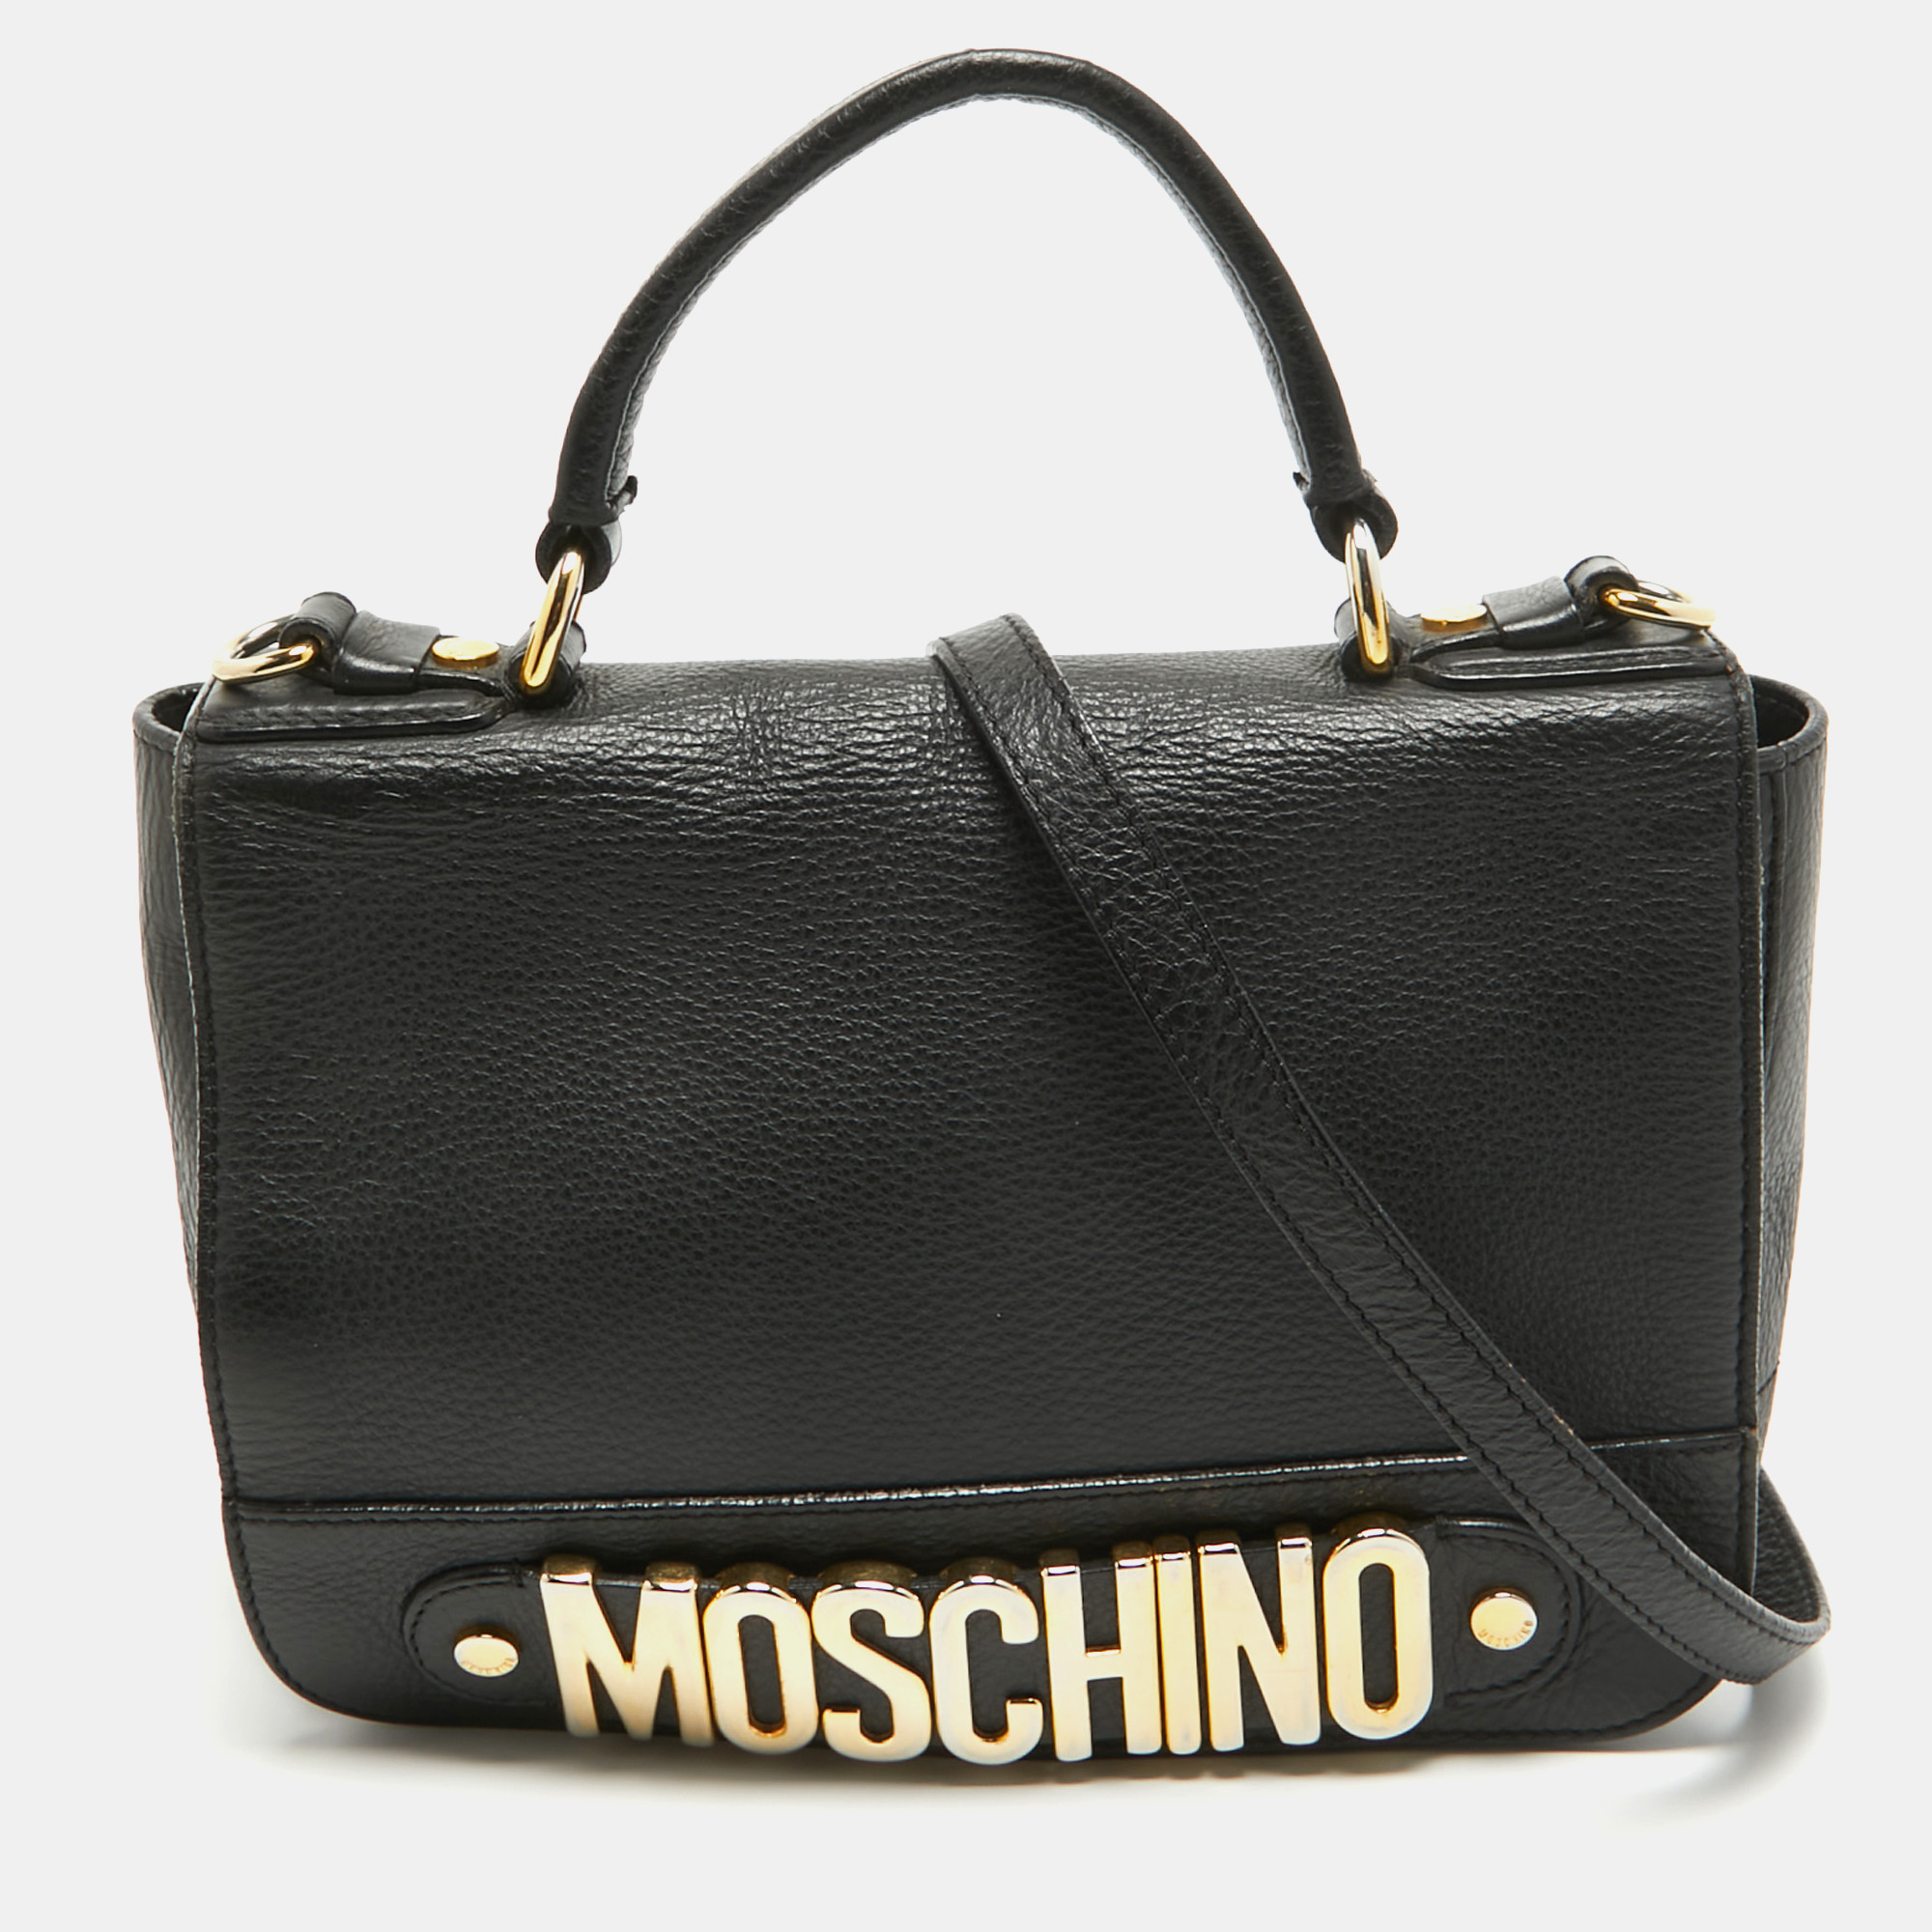 Moschino black leather logo flap top handle bag